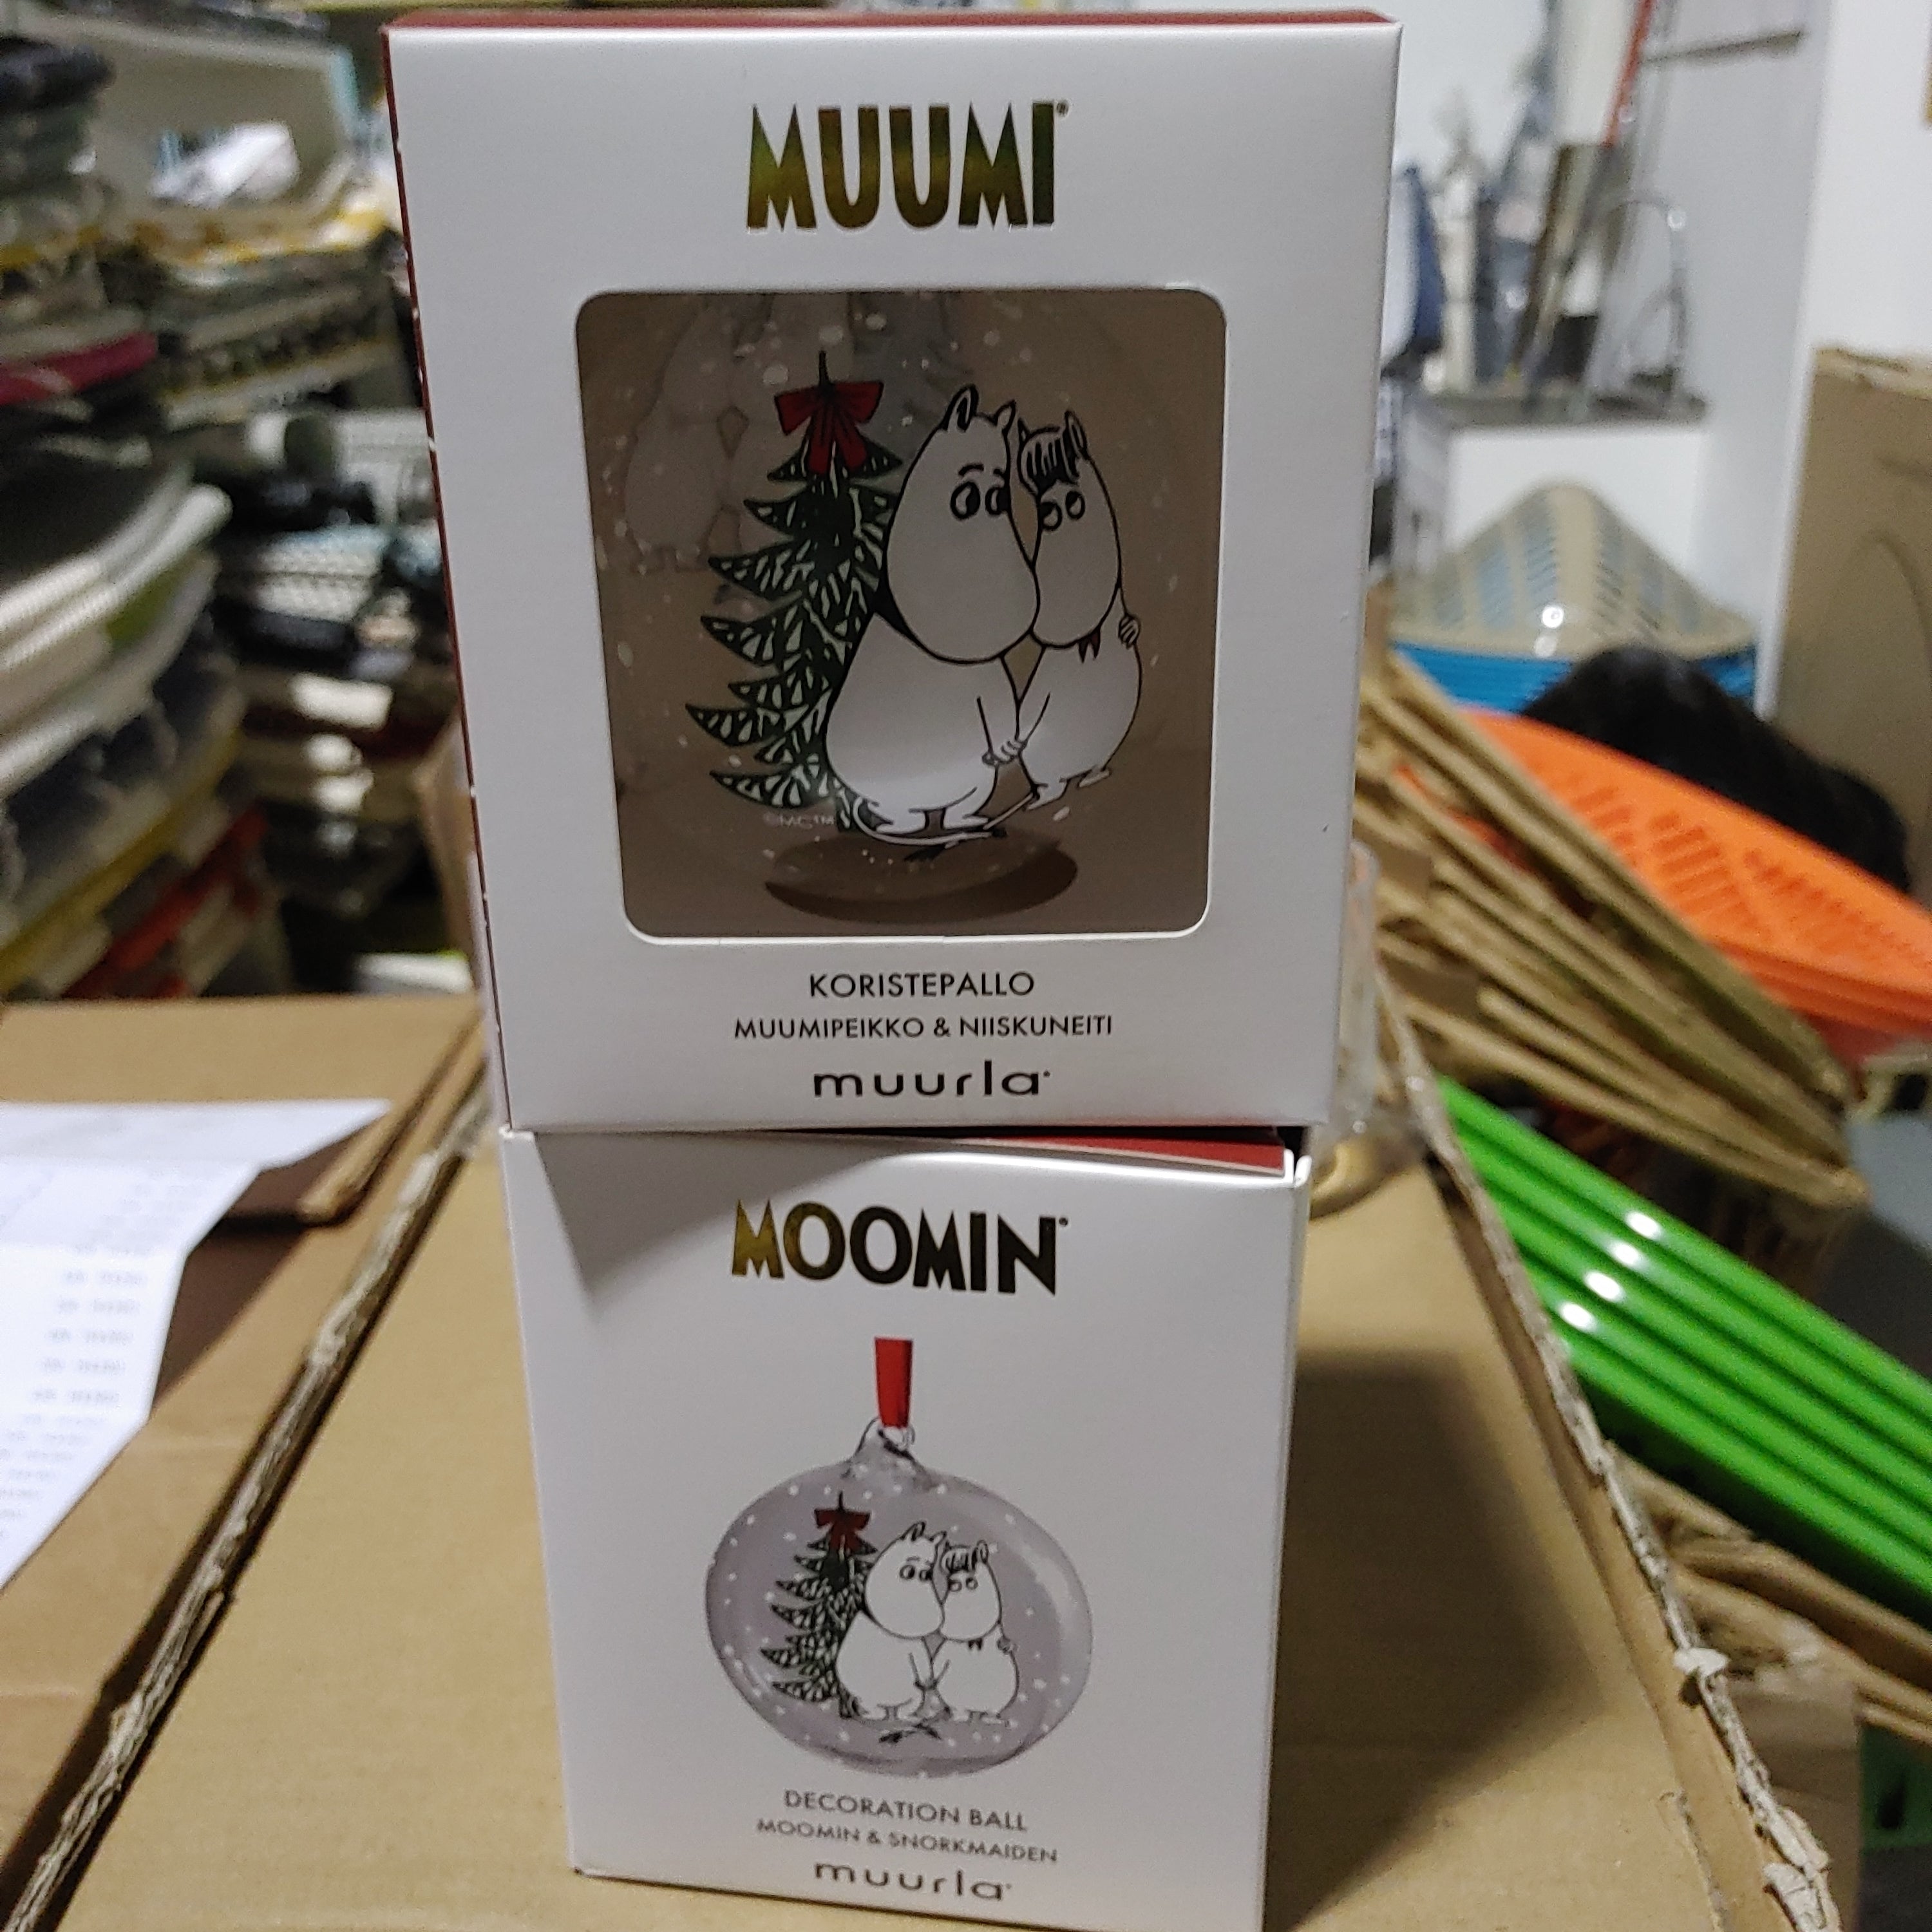 Moomin Christmas ball 9cm, Moomin & Snorkmaiden